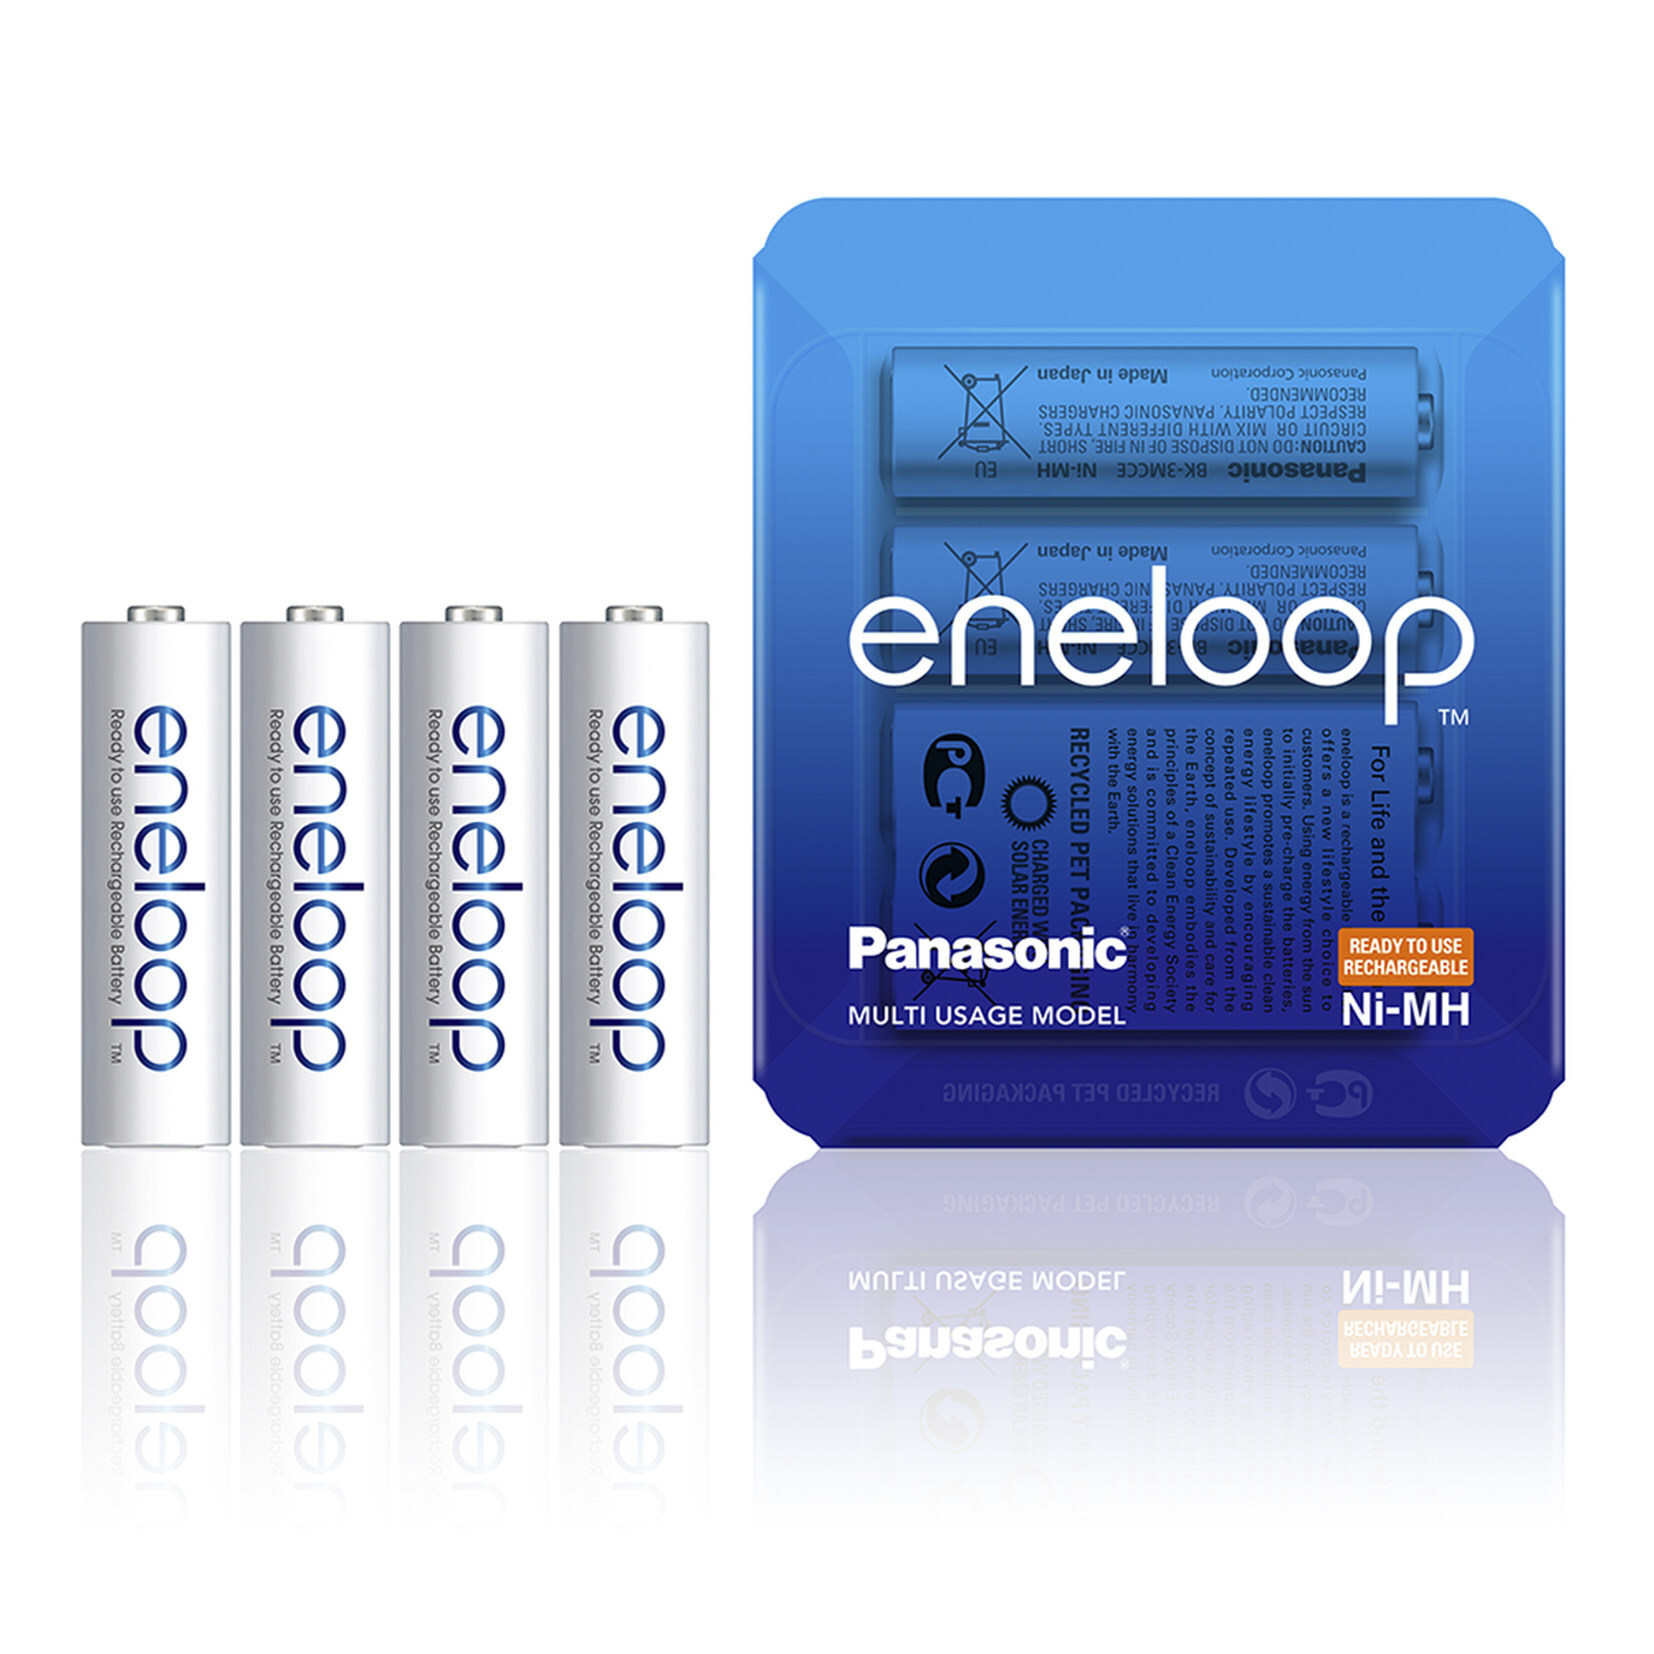 Eneloop rechargeable batteries.